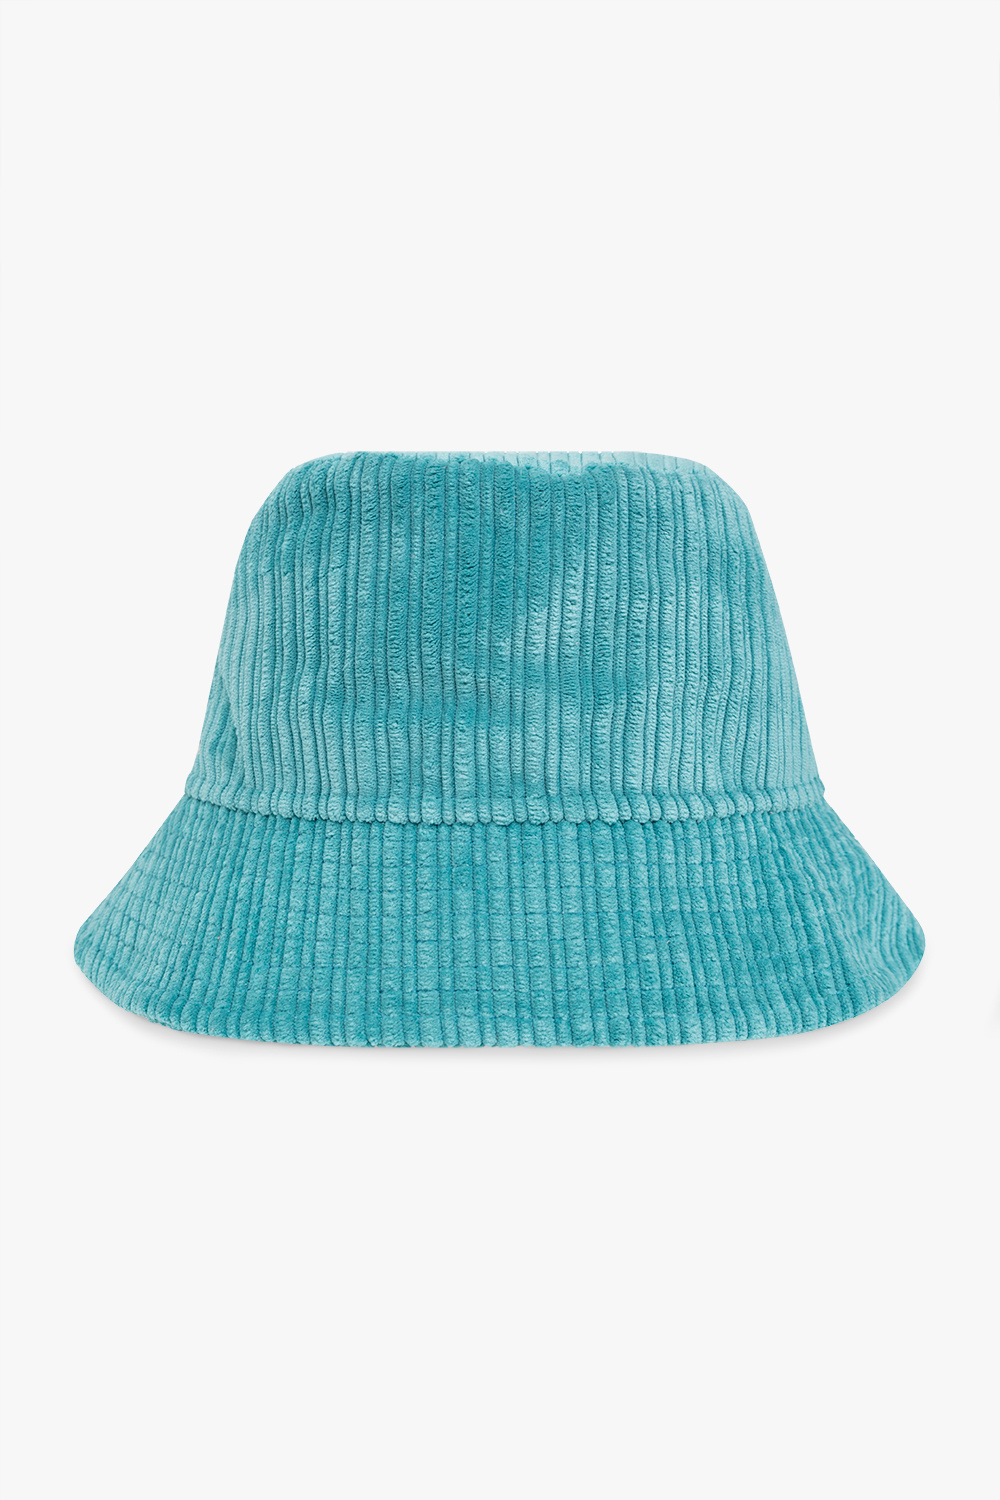 MARANT ‘Haleyh’ corduroy bucket lion hat